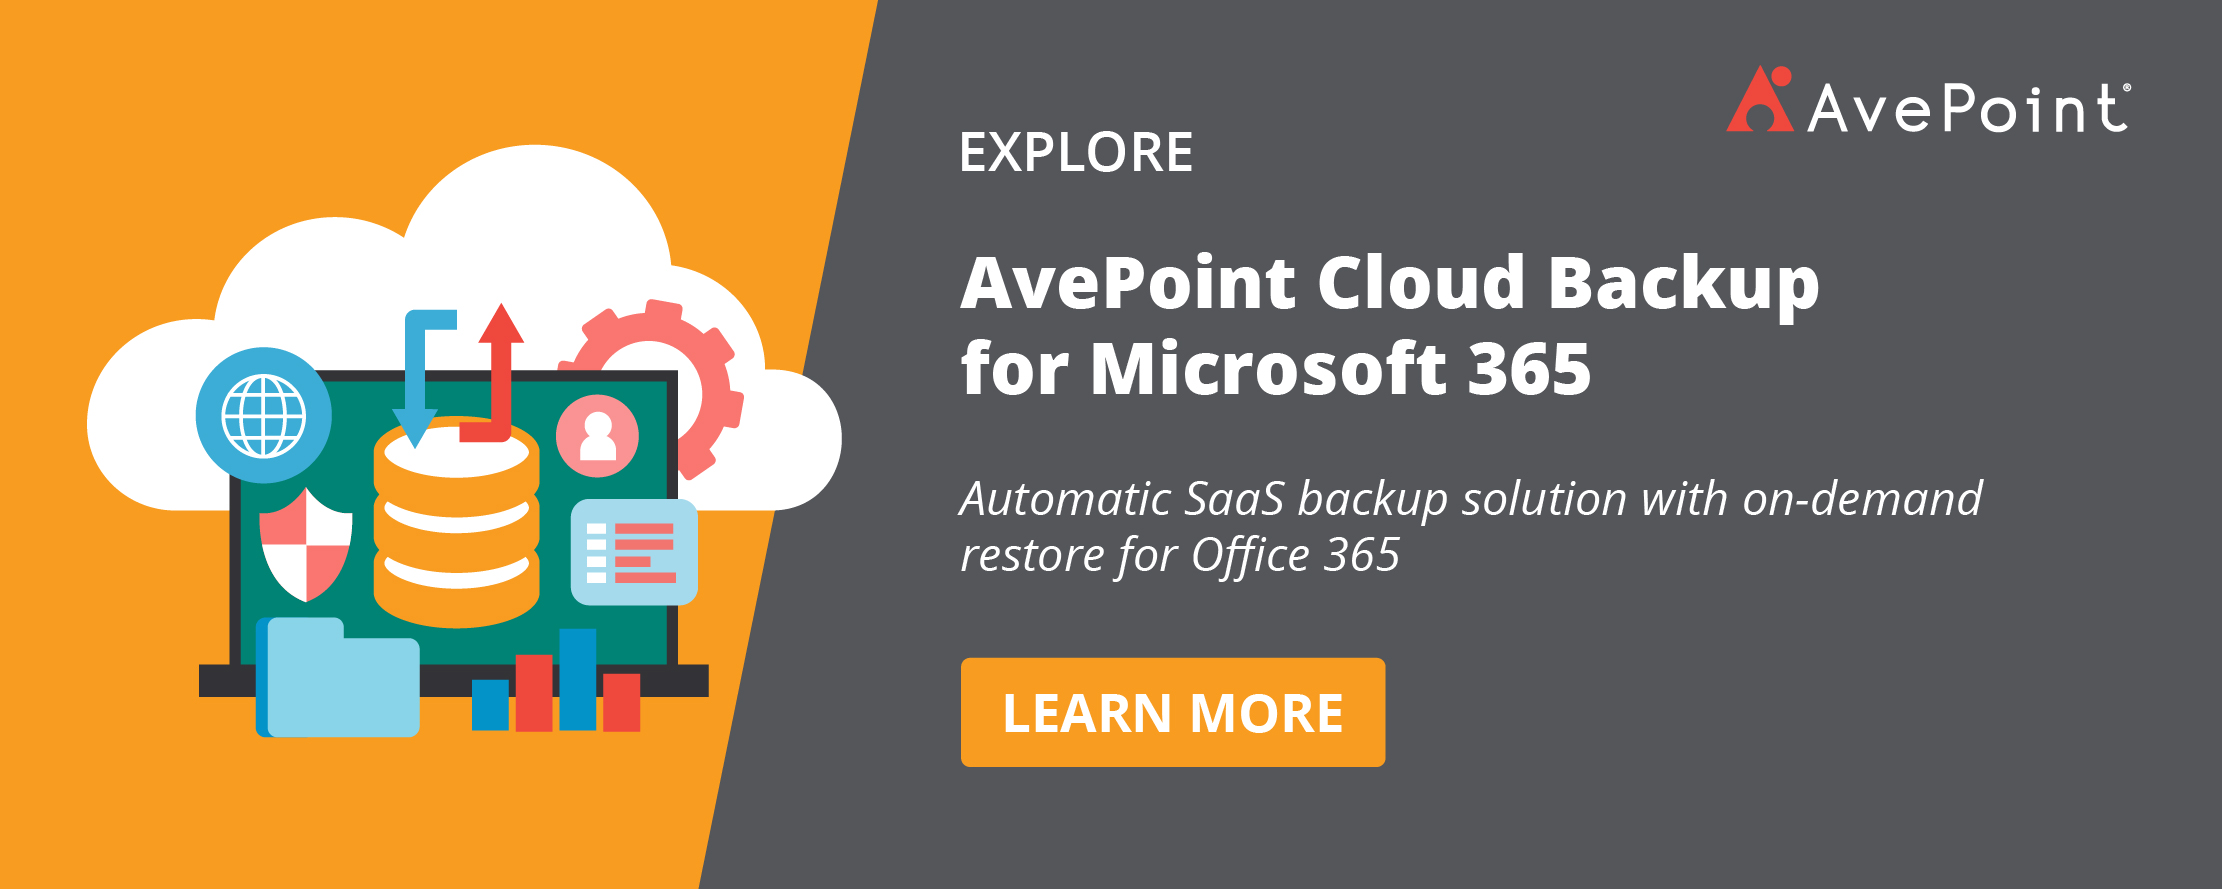 avepoint-cloud-backup-microsoft-365